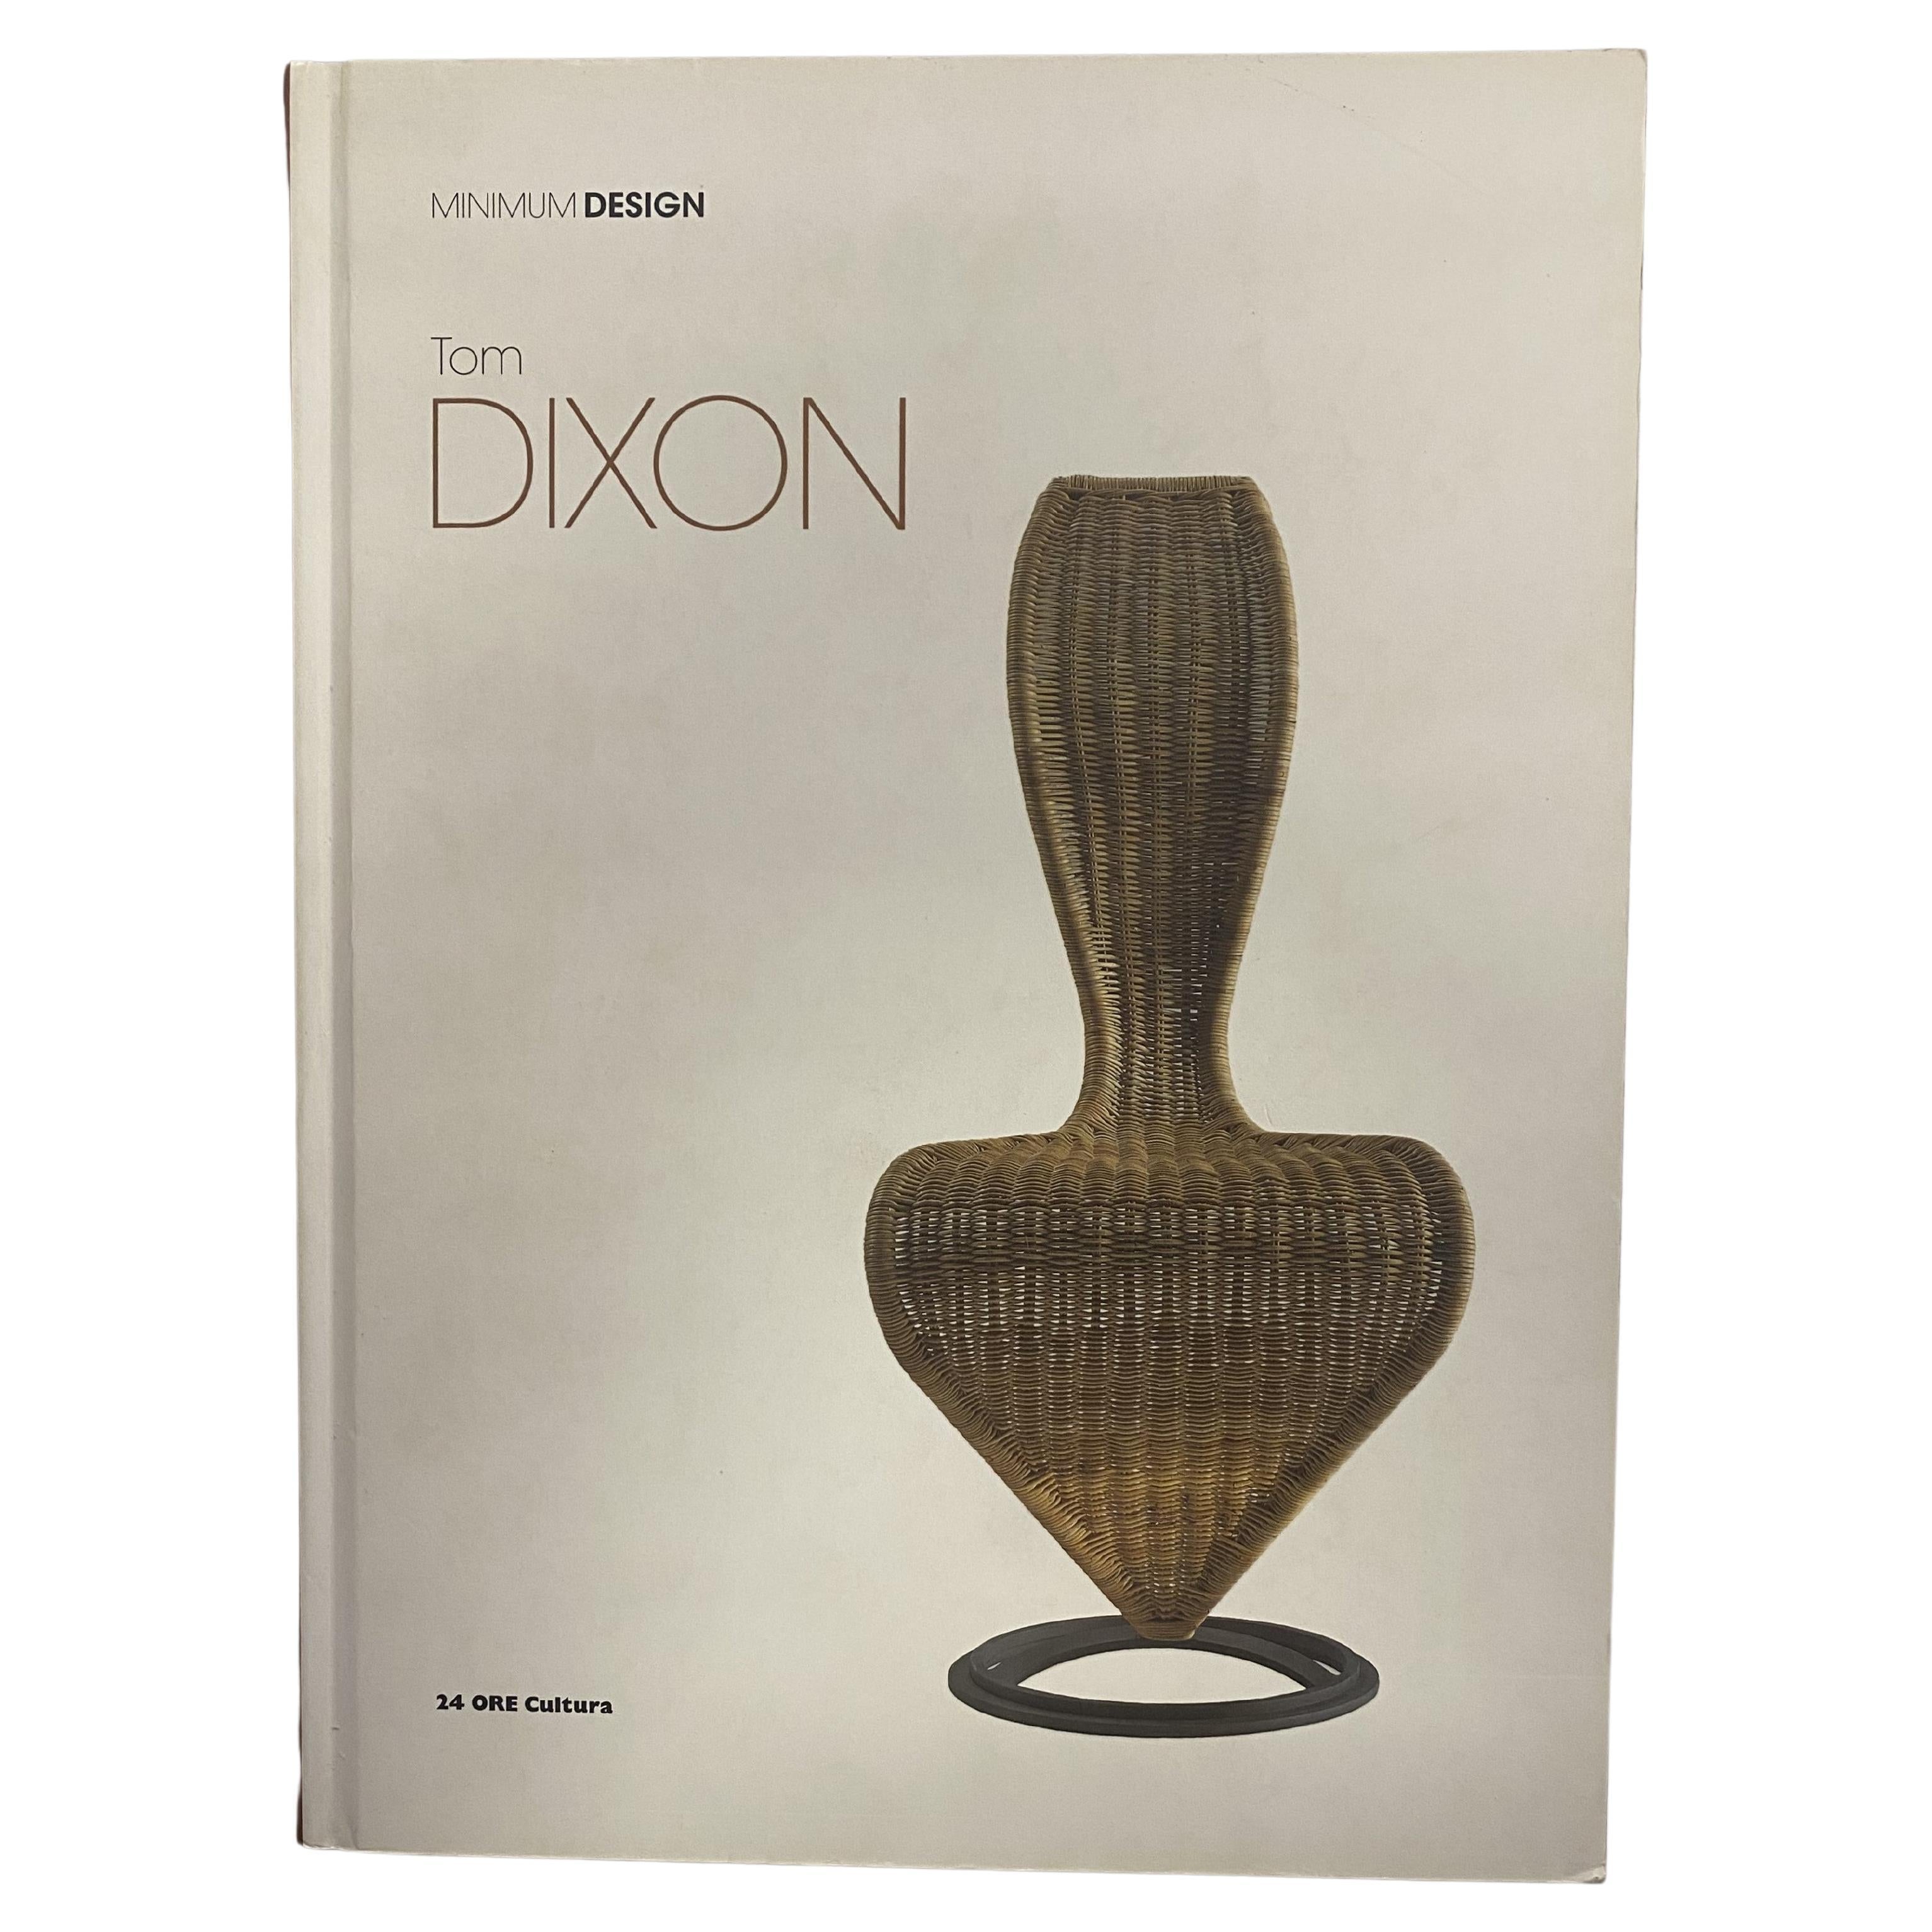 Tom Dixon: Minimum Design by Davide Fabio Colaci and Angela Rui (Book) For Sale